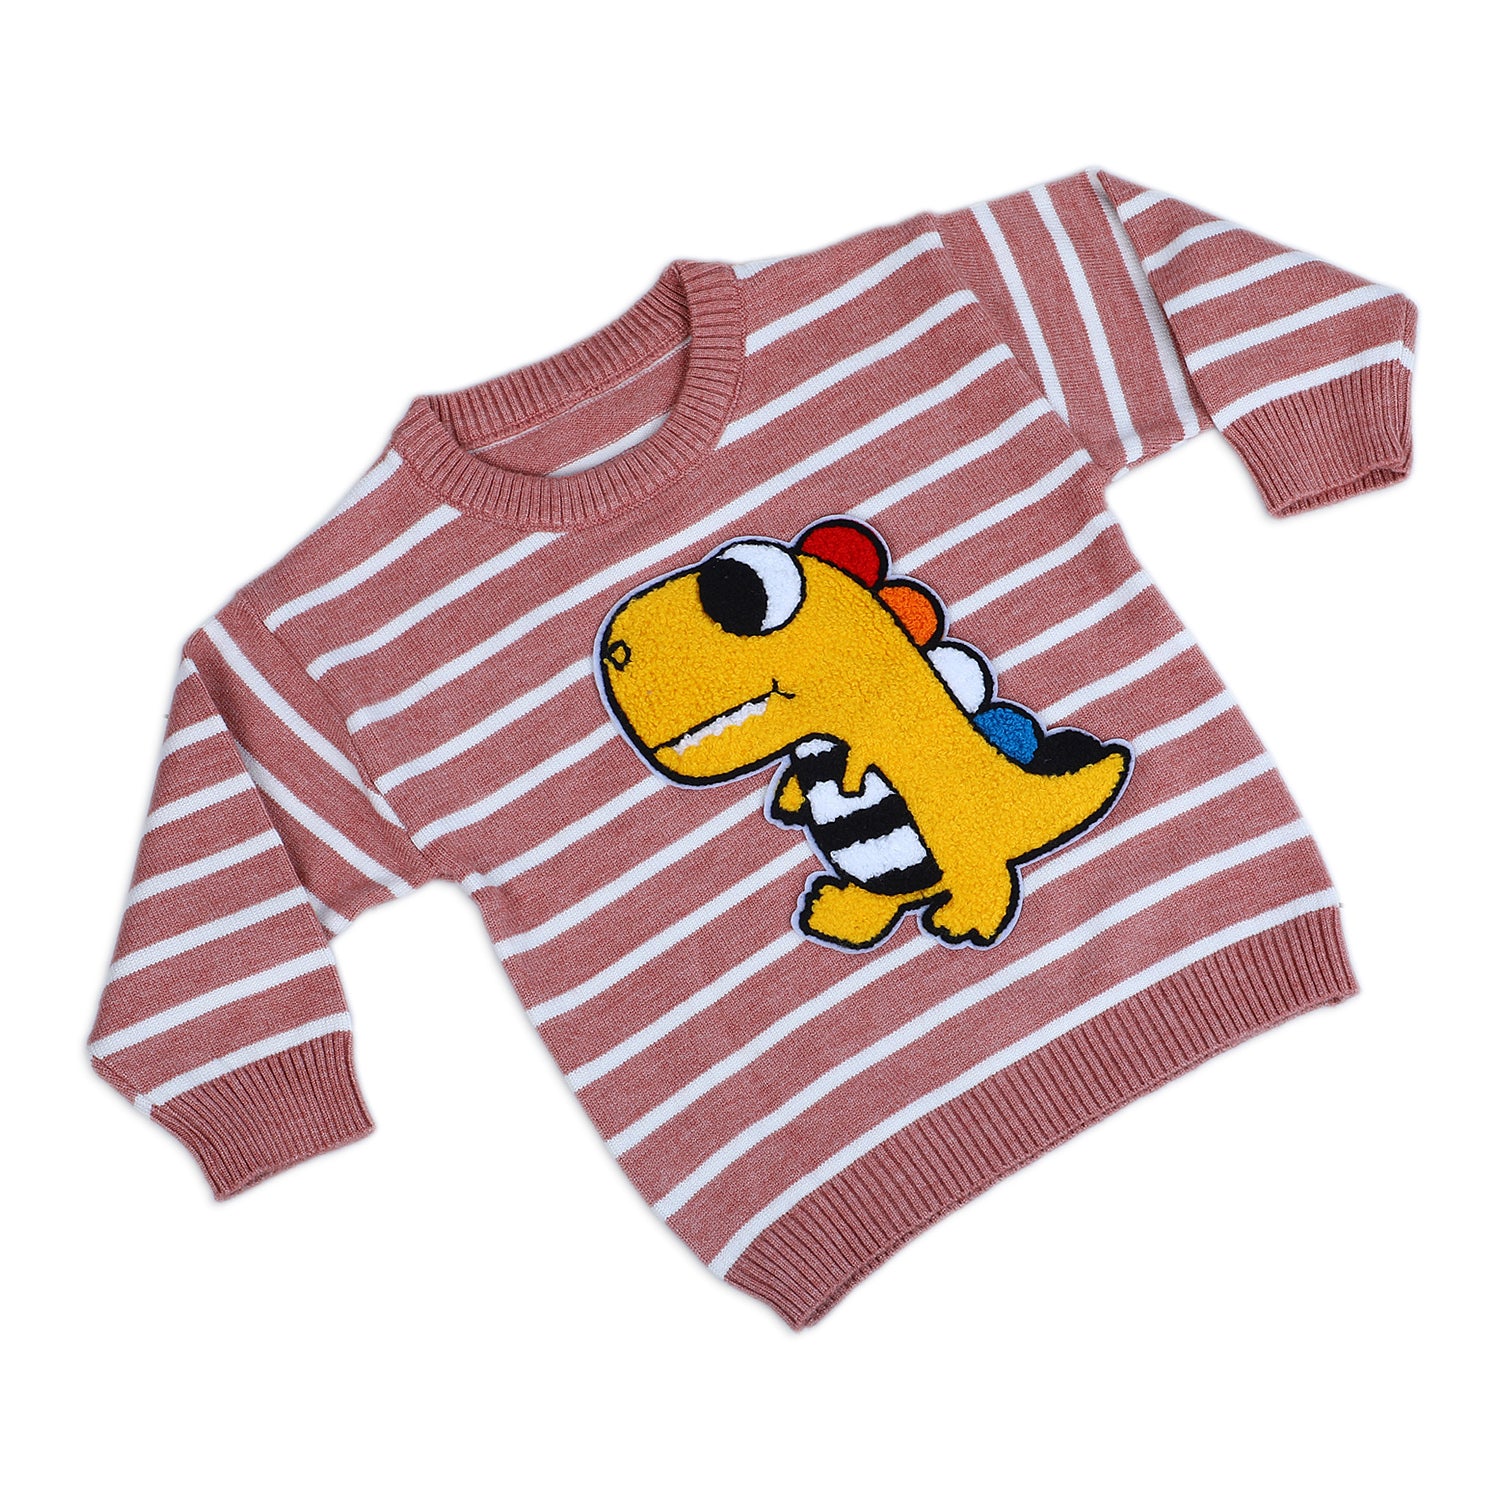 Dashing Dino Striped Premium Full Sleeves Knitted Sweater - Reddish Brown - Baby Moo